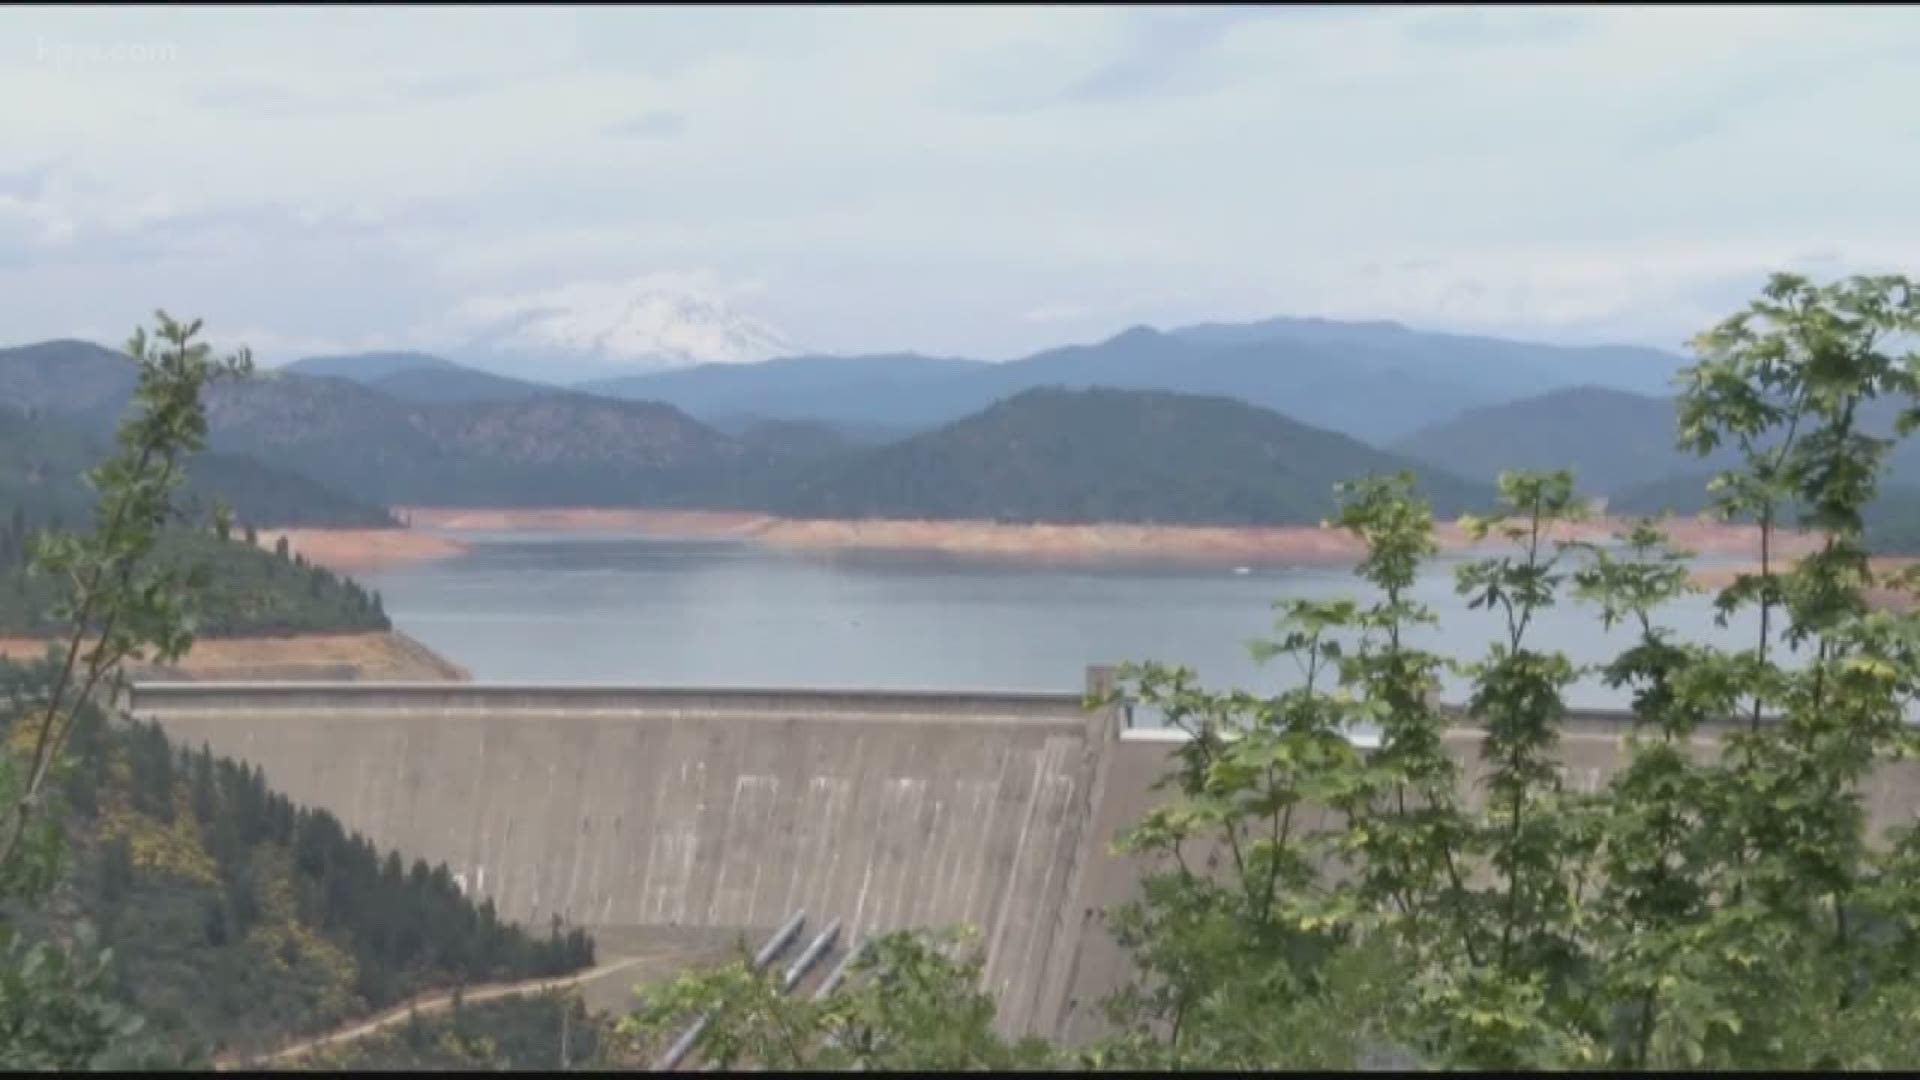 University of Oregon student found dead at Shasta Lake